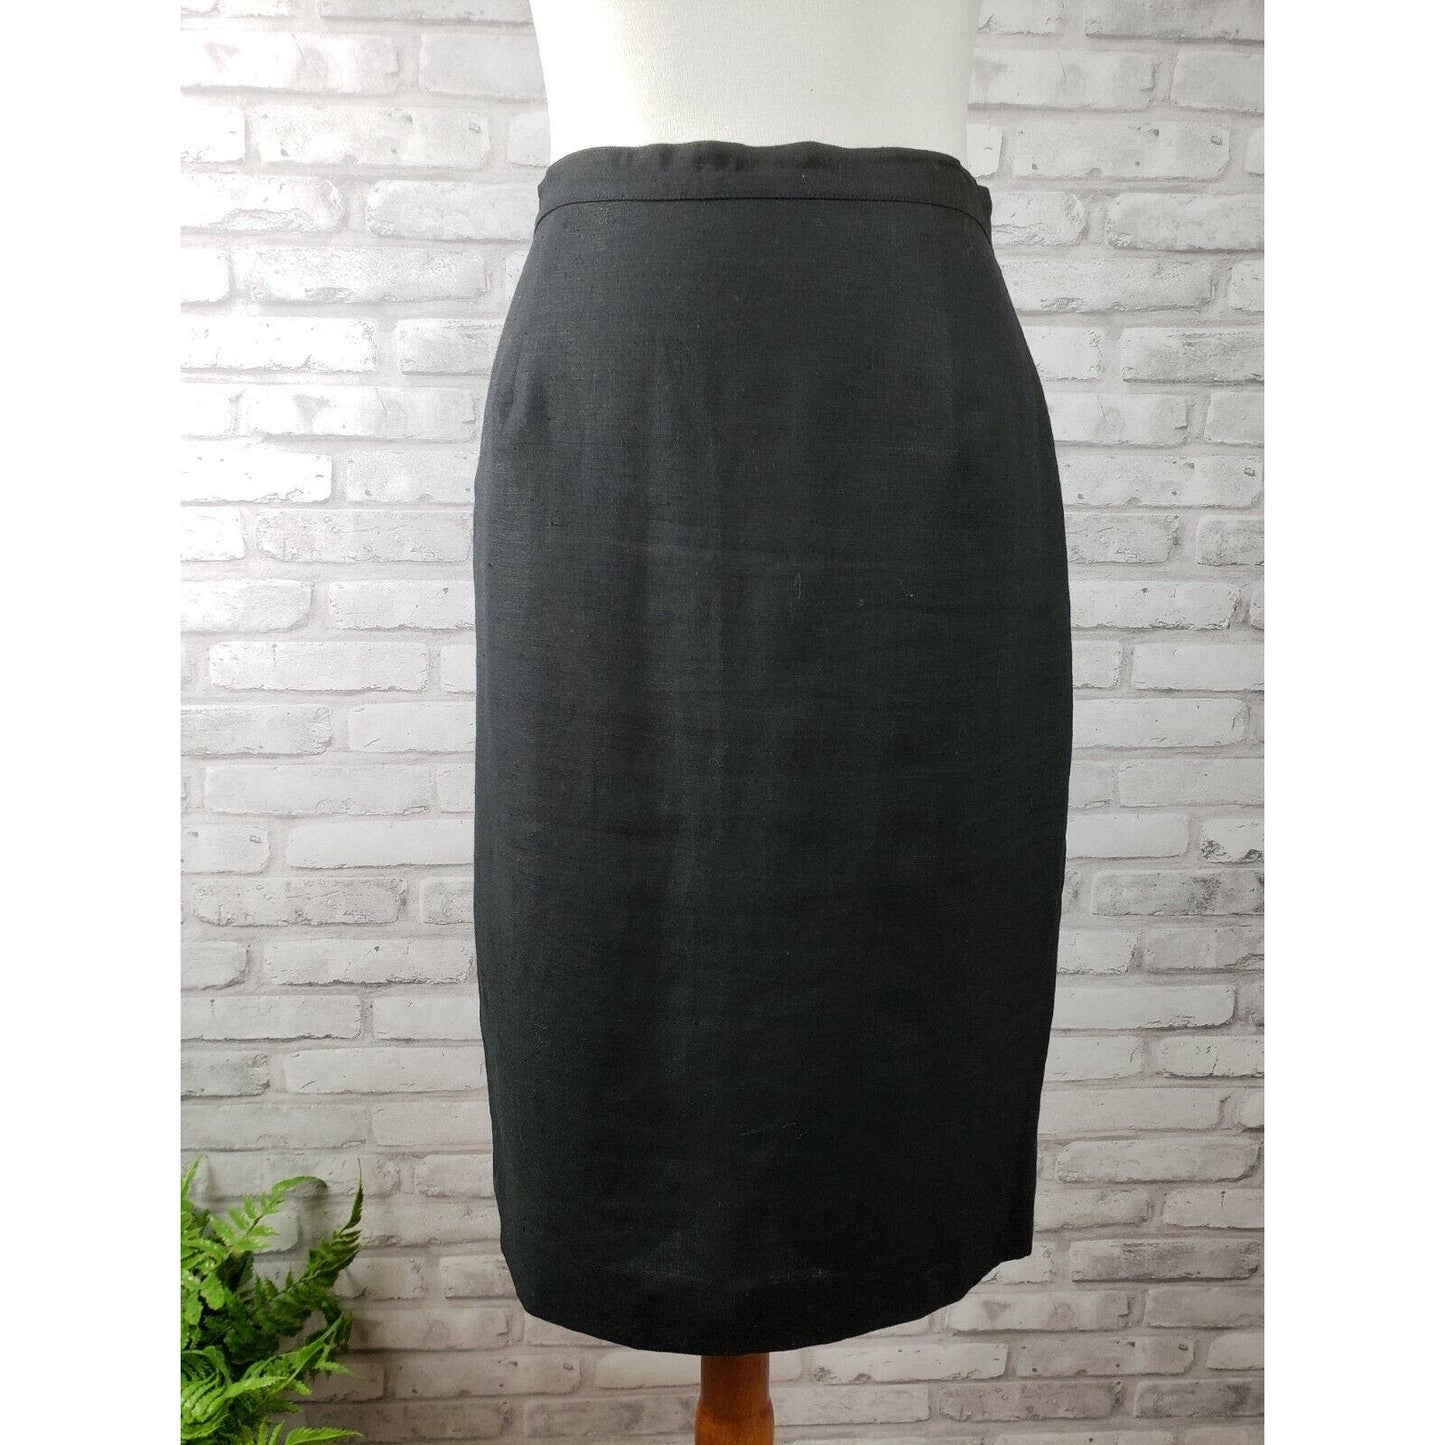 Laura Ashley sz 6 short sleeve jacket and pencil skirt suit set black 100% linen